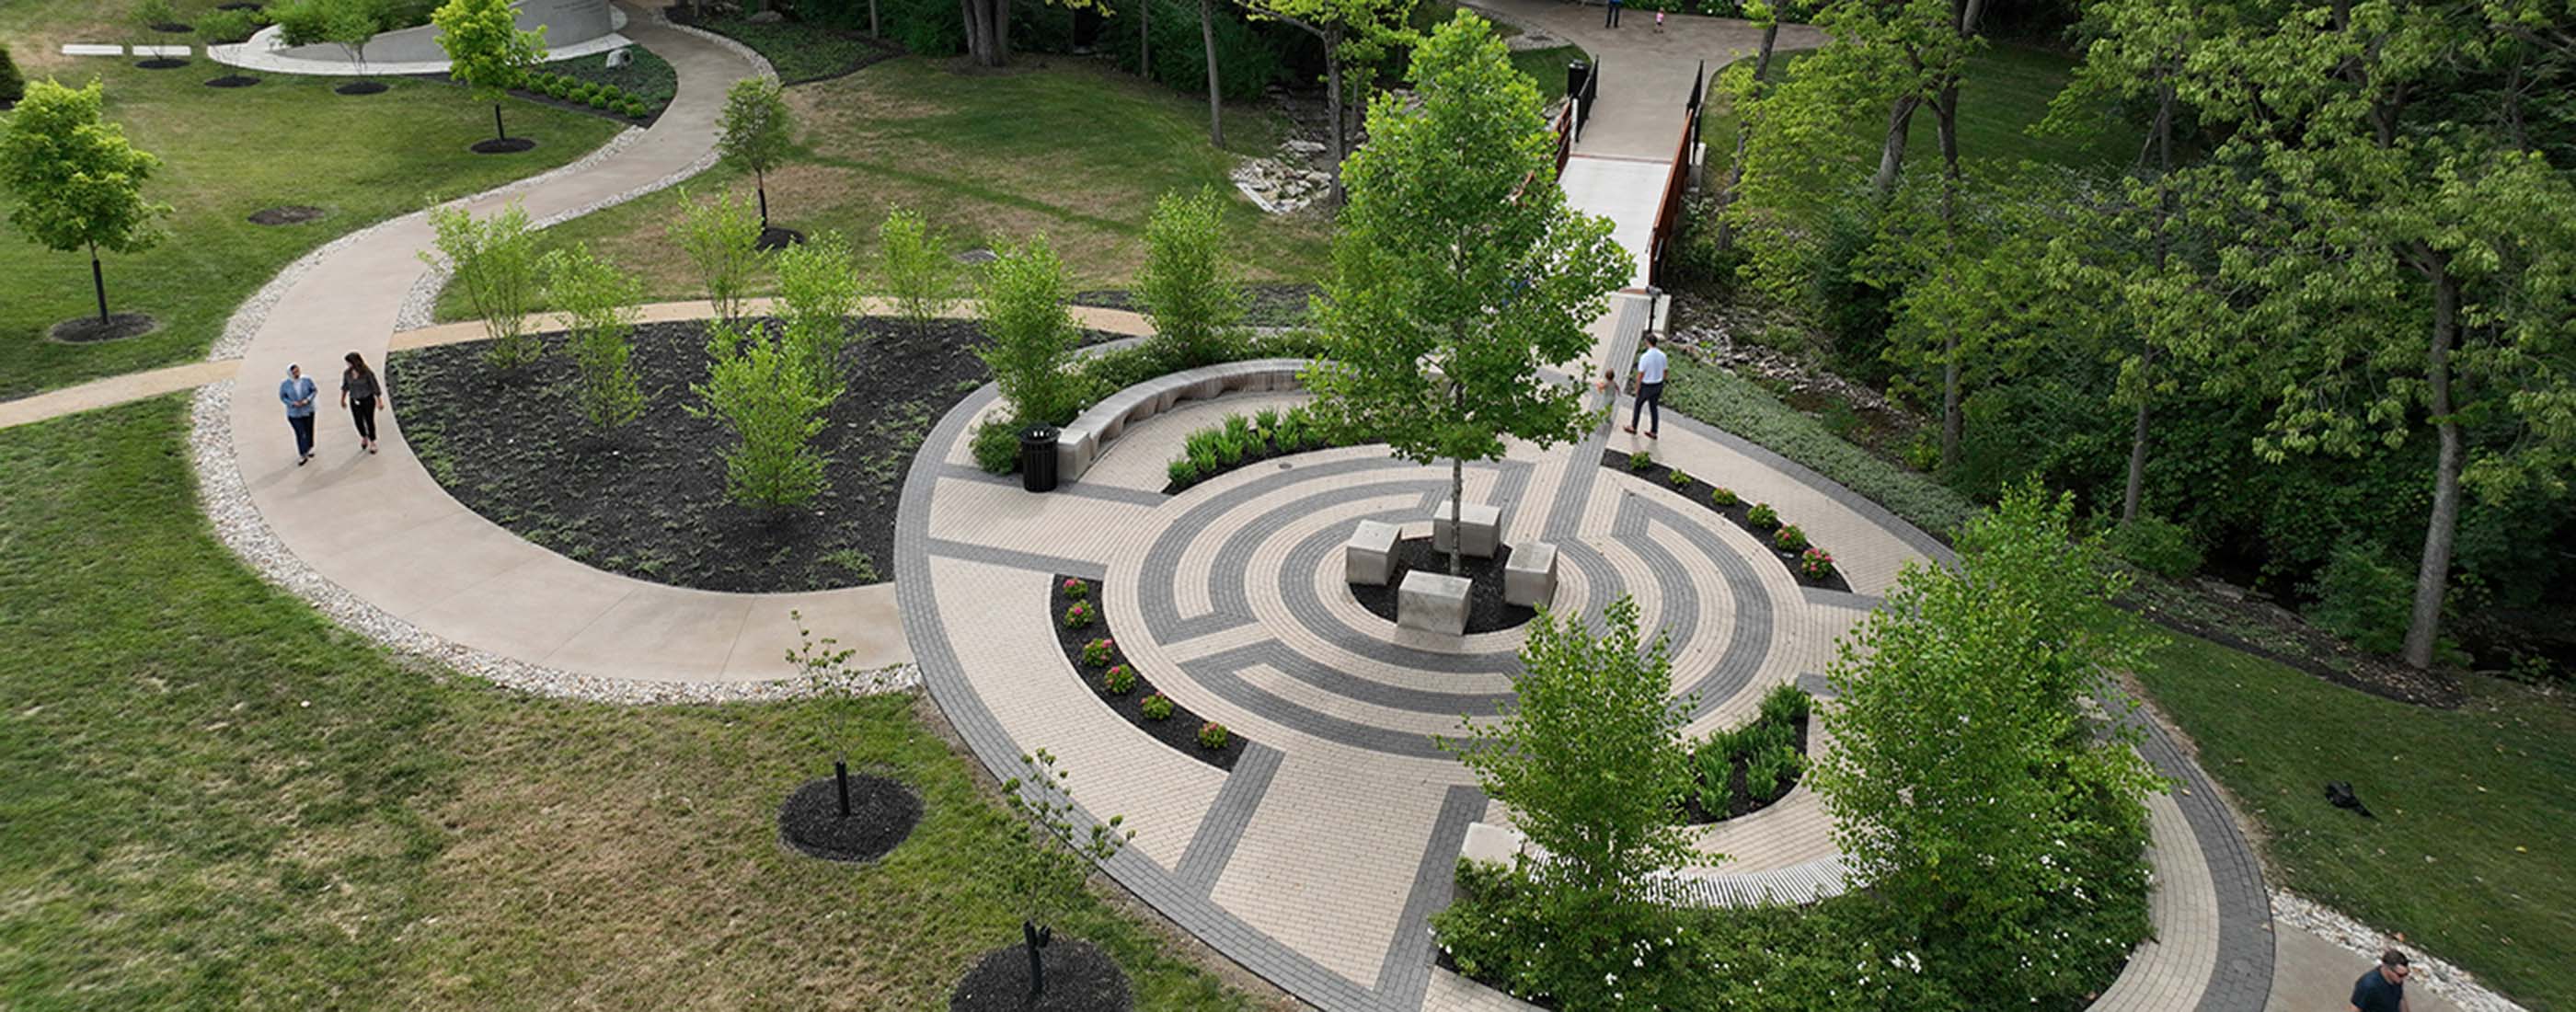 Wesley Chapel built entrance labyrinth